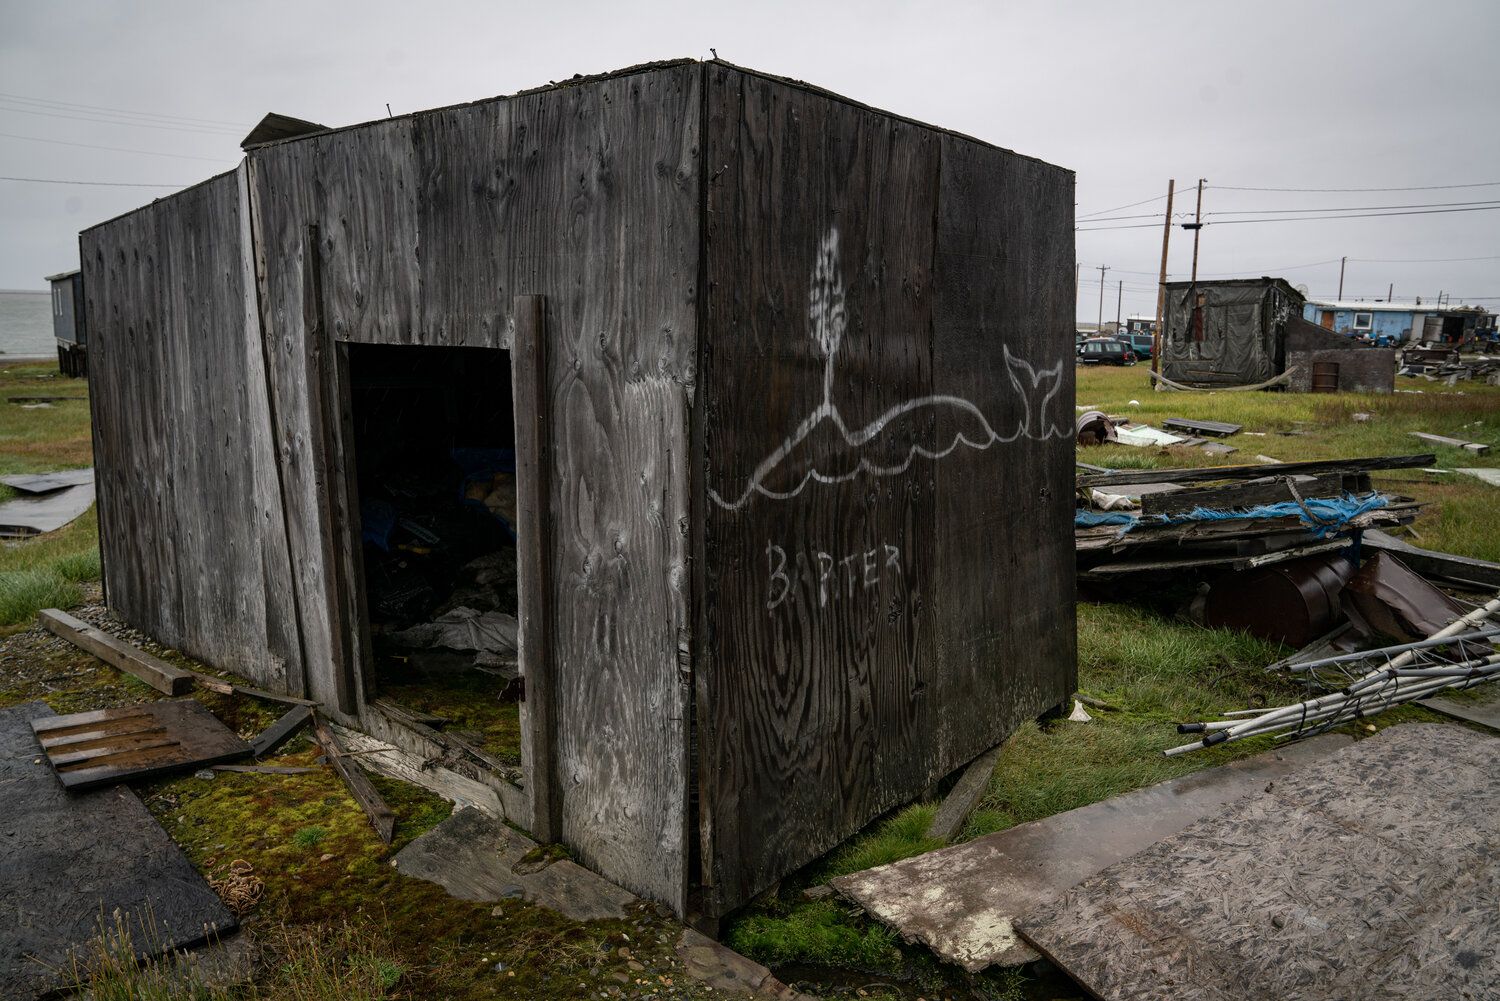 Whale art graffiti on side of hut. Image by Nick Mott. United States, 2019.